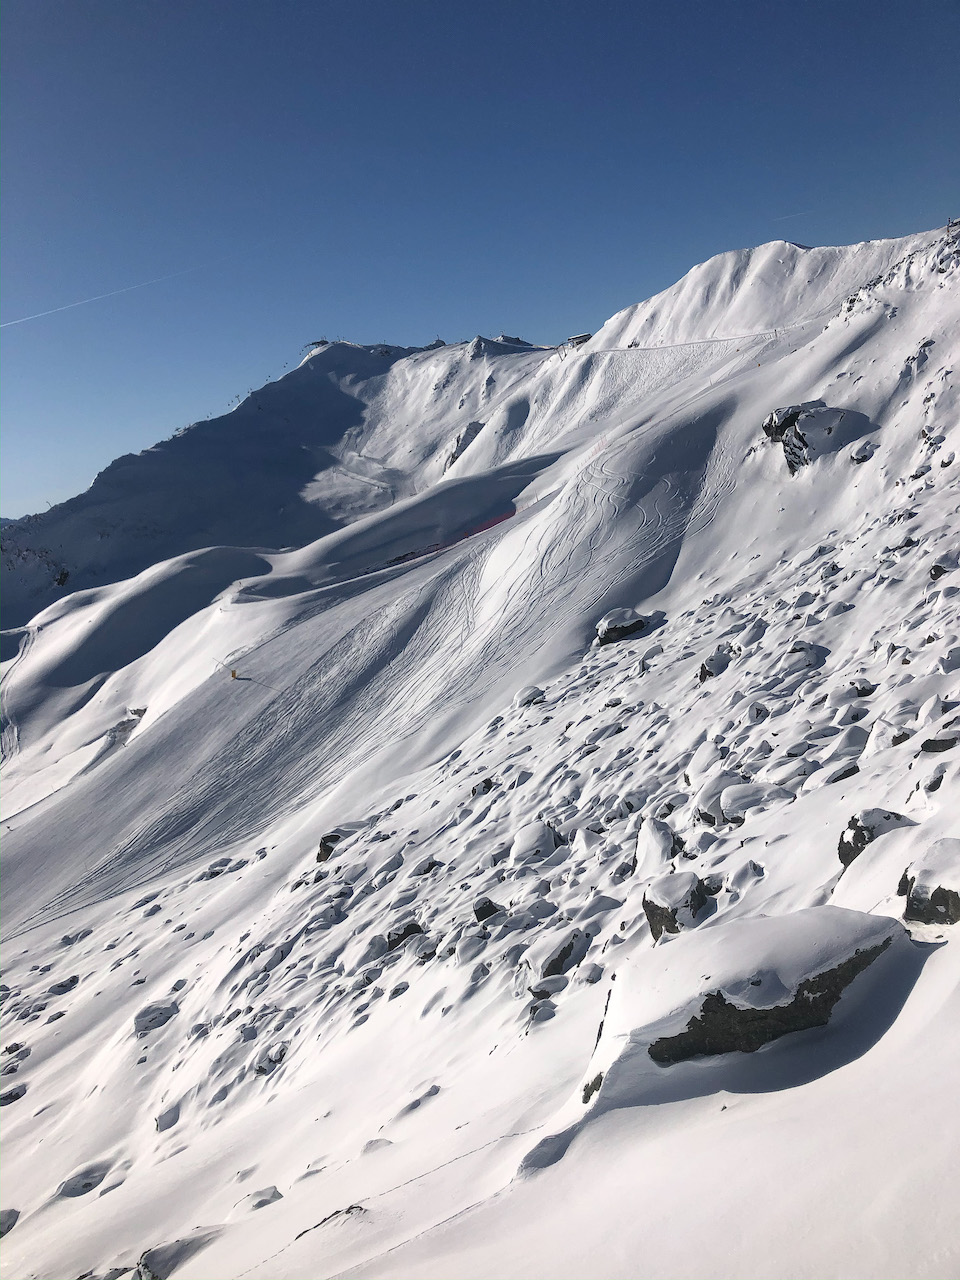 Ischgl ski - wintersport tips - Samnaun - skimap Ischgl - Schhmugglerrunden/ Smuggler's circuits - Samnaun duty free run 